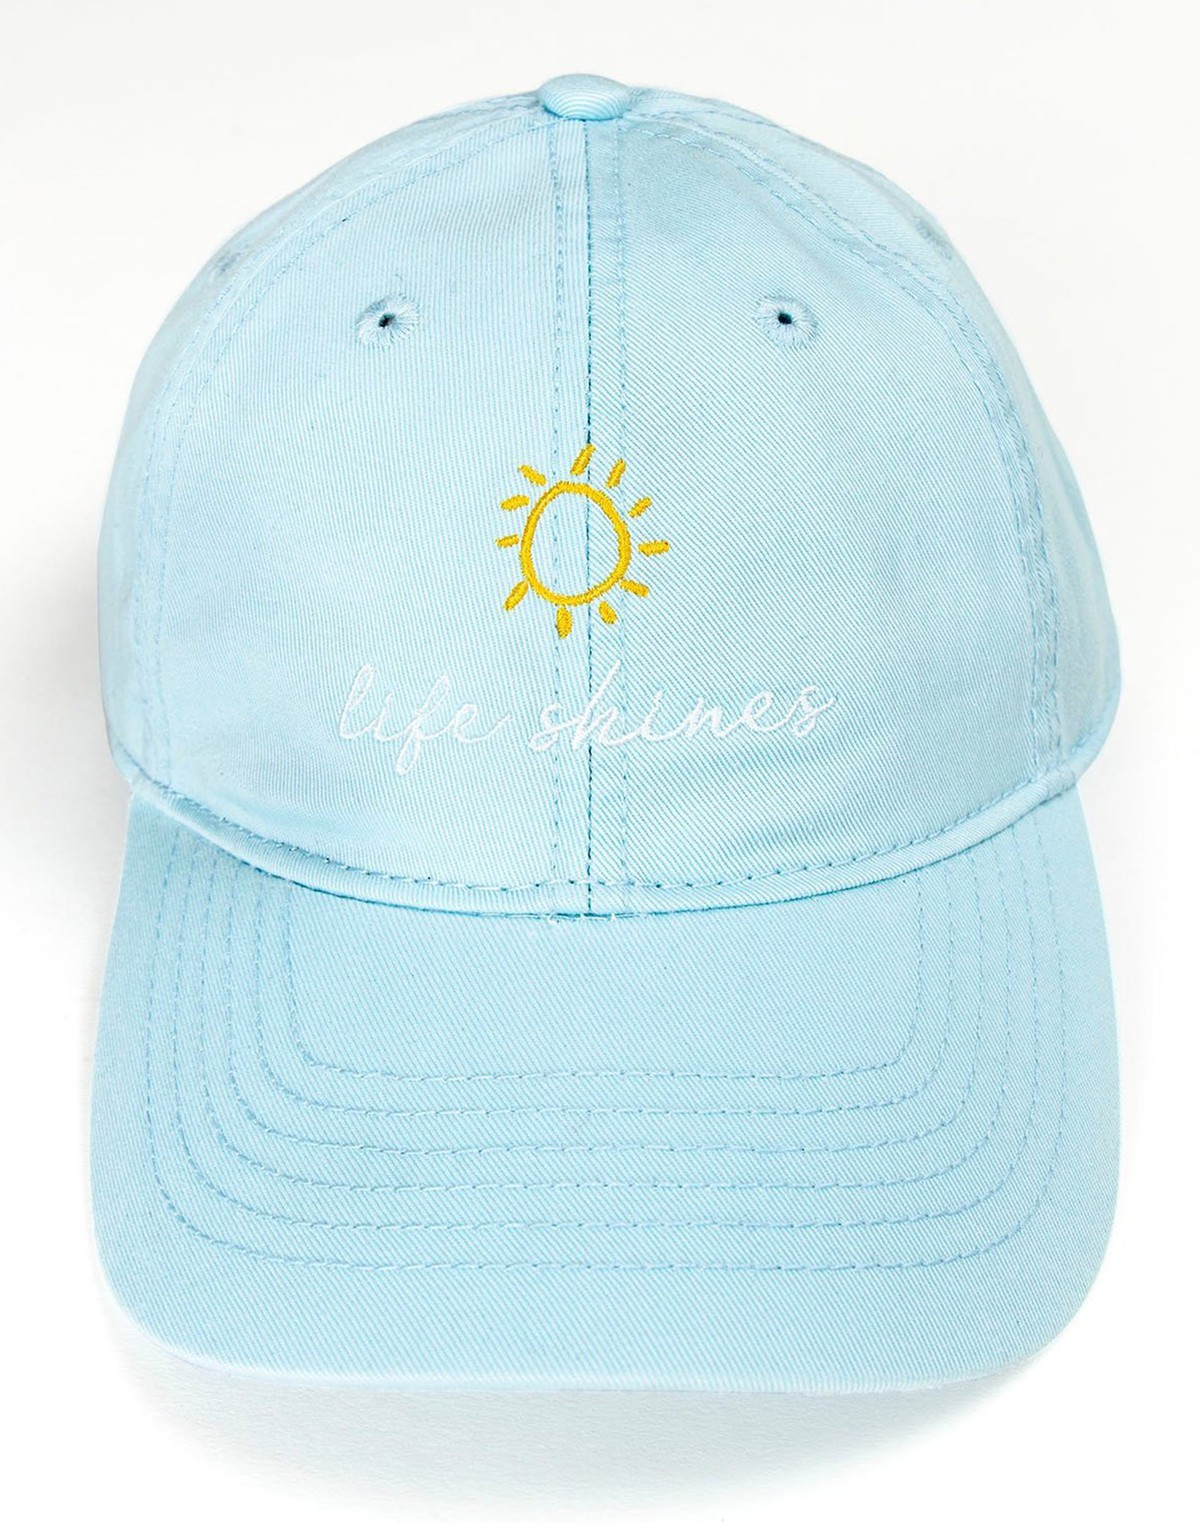 Life Shines Hat - Women - Powder Blue item